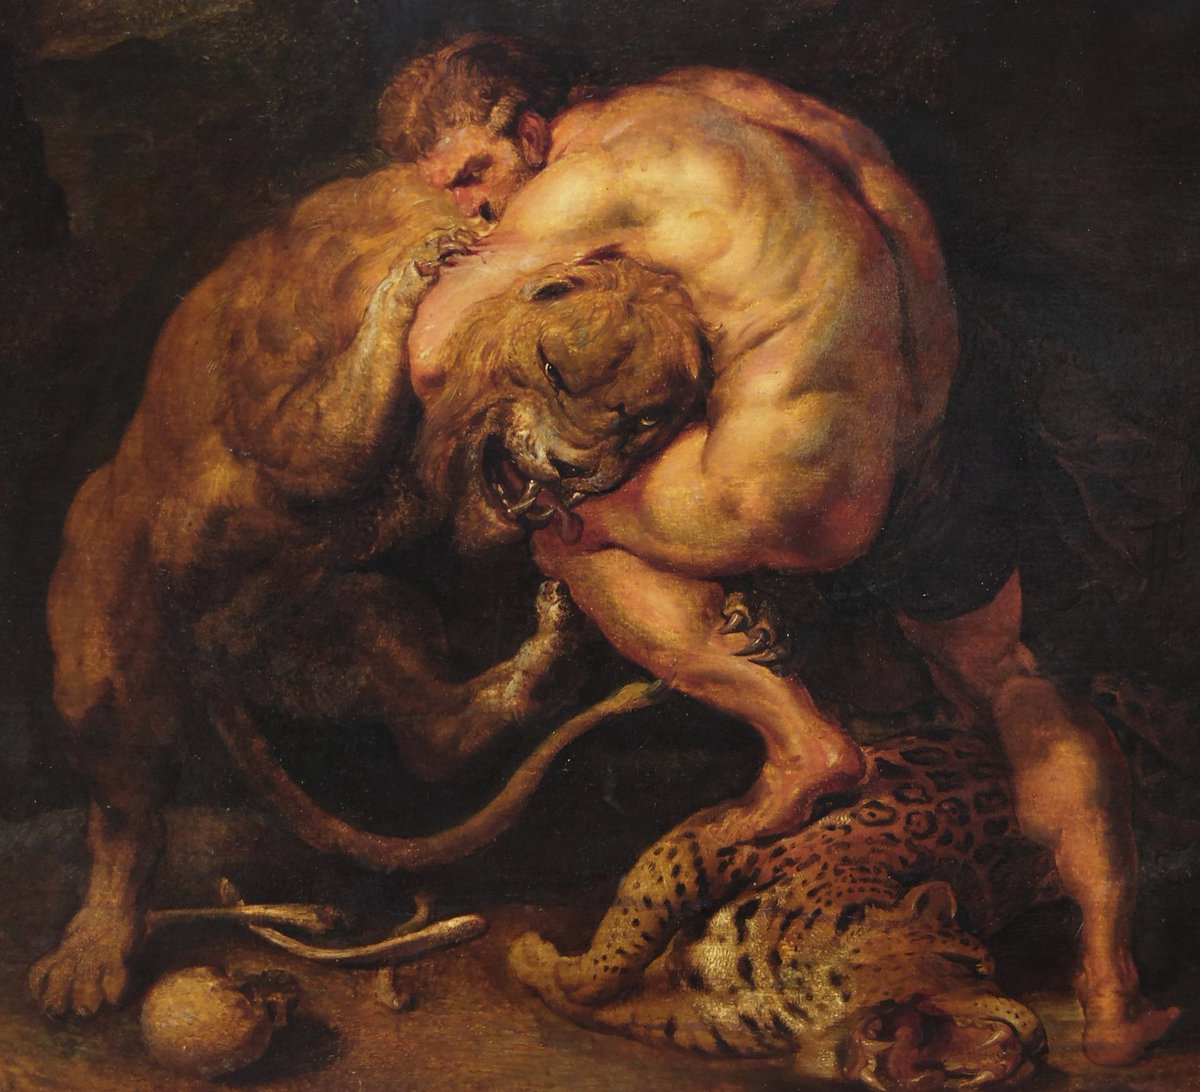 Hercules and the Lion of Nemea 
— Peter Paul Rubens (1577-1640)